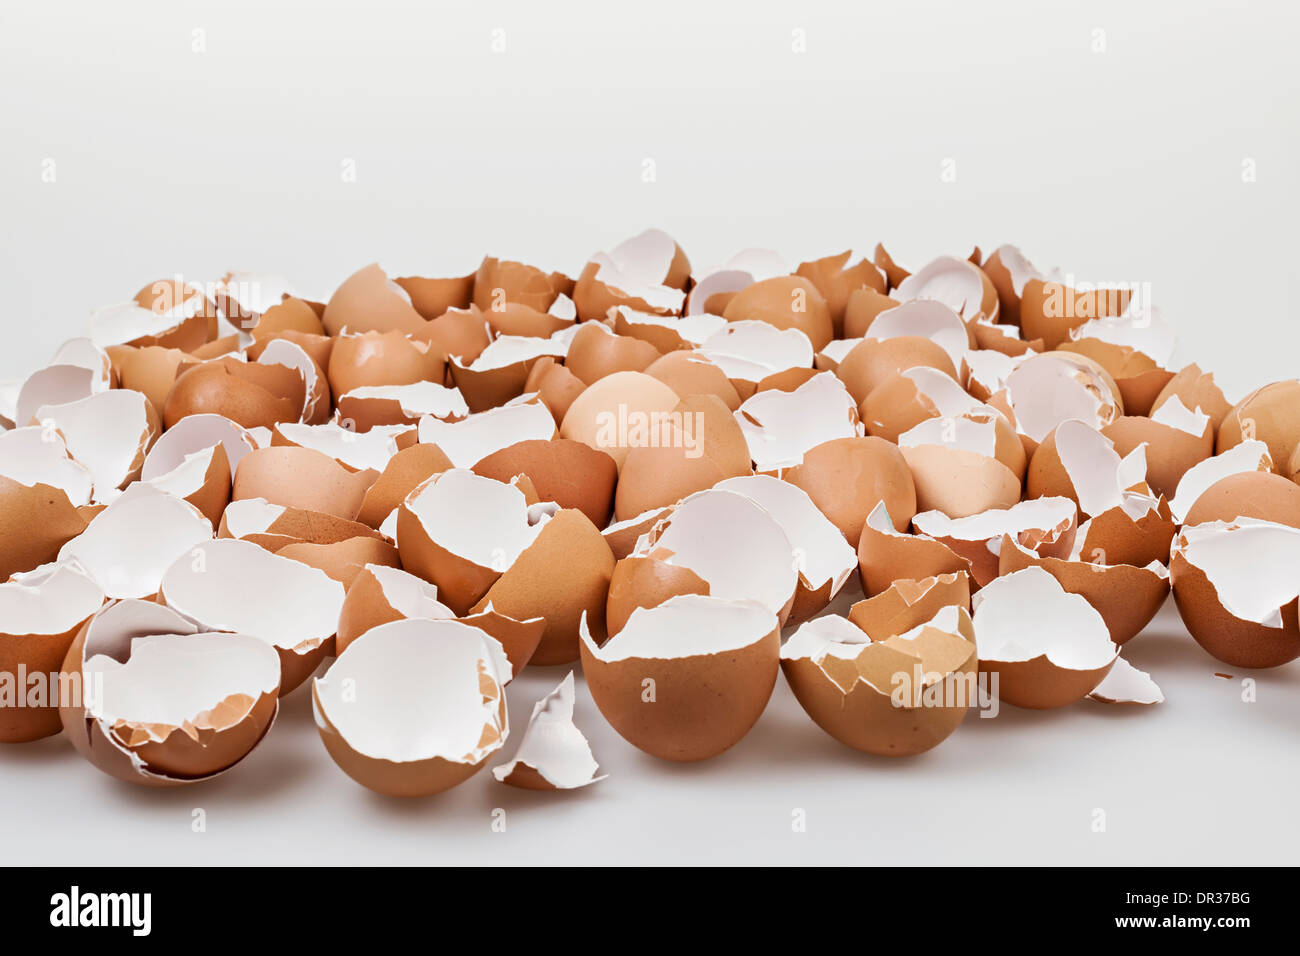 Pile of many broken brown empty eggshells Stock Photo